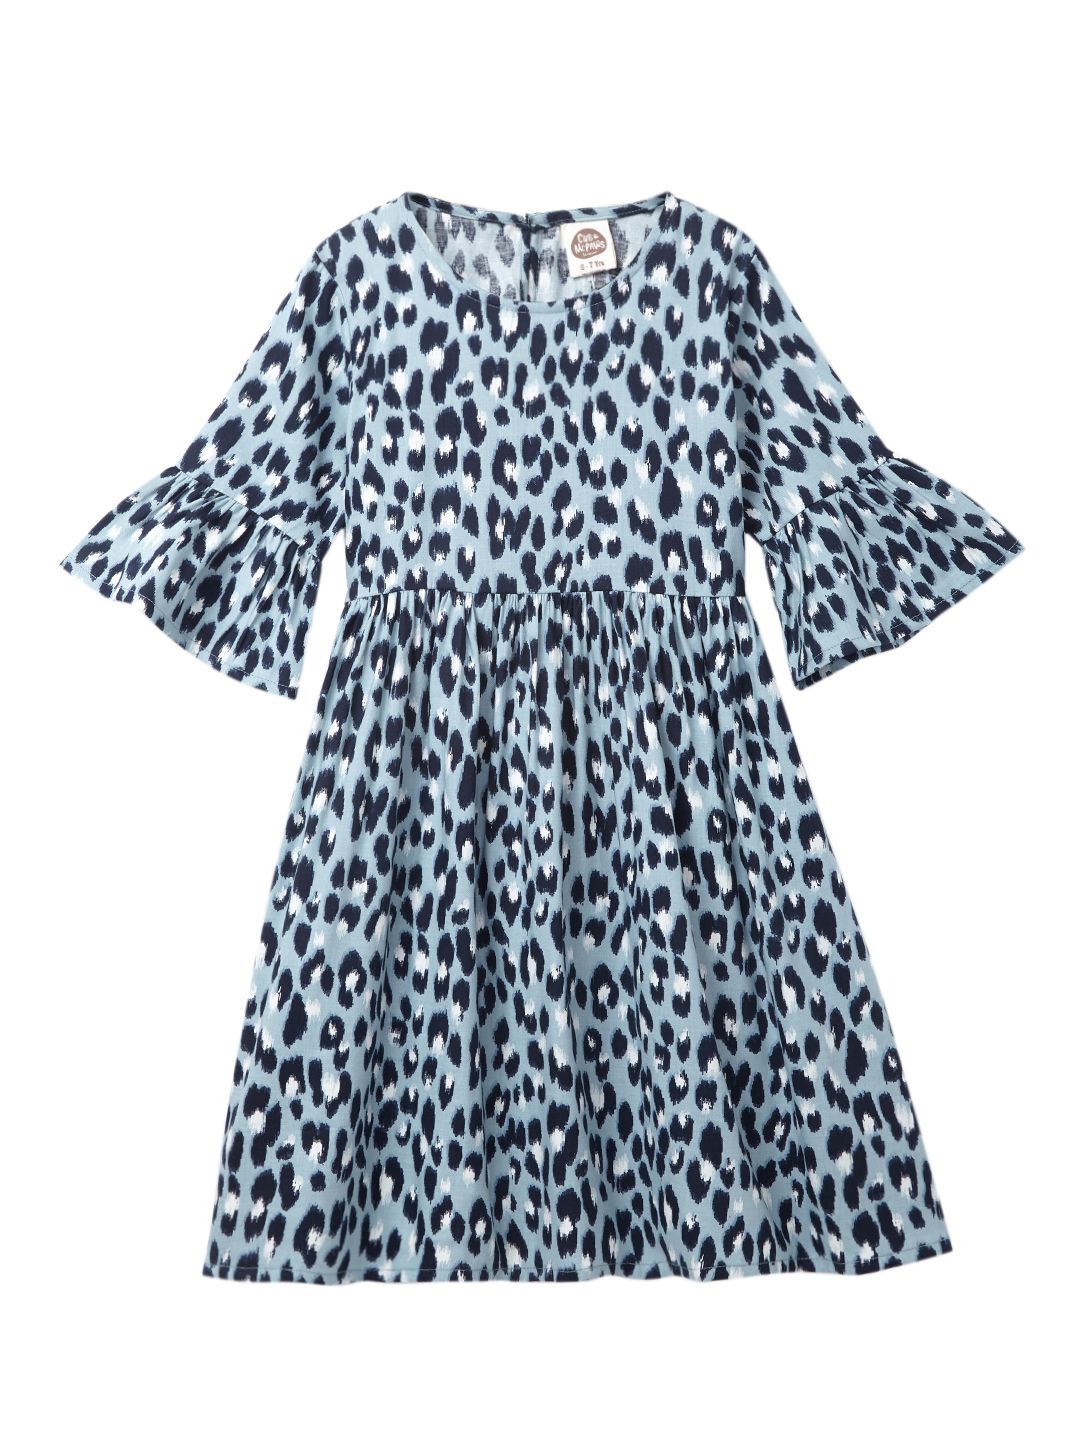 Girls Cotton Knee Length Leopard Print Dress,Multi